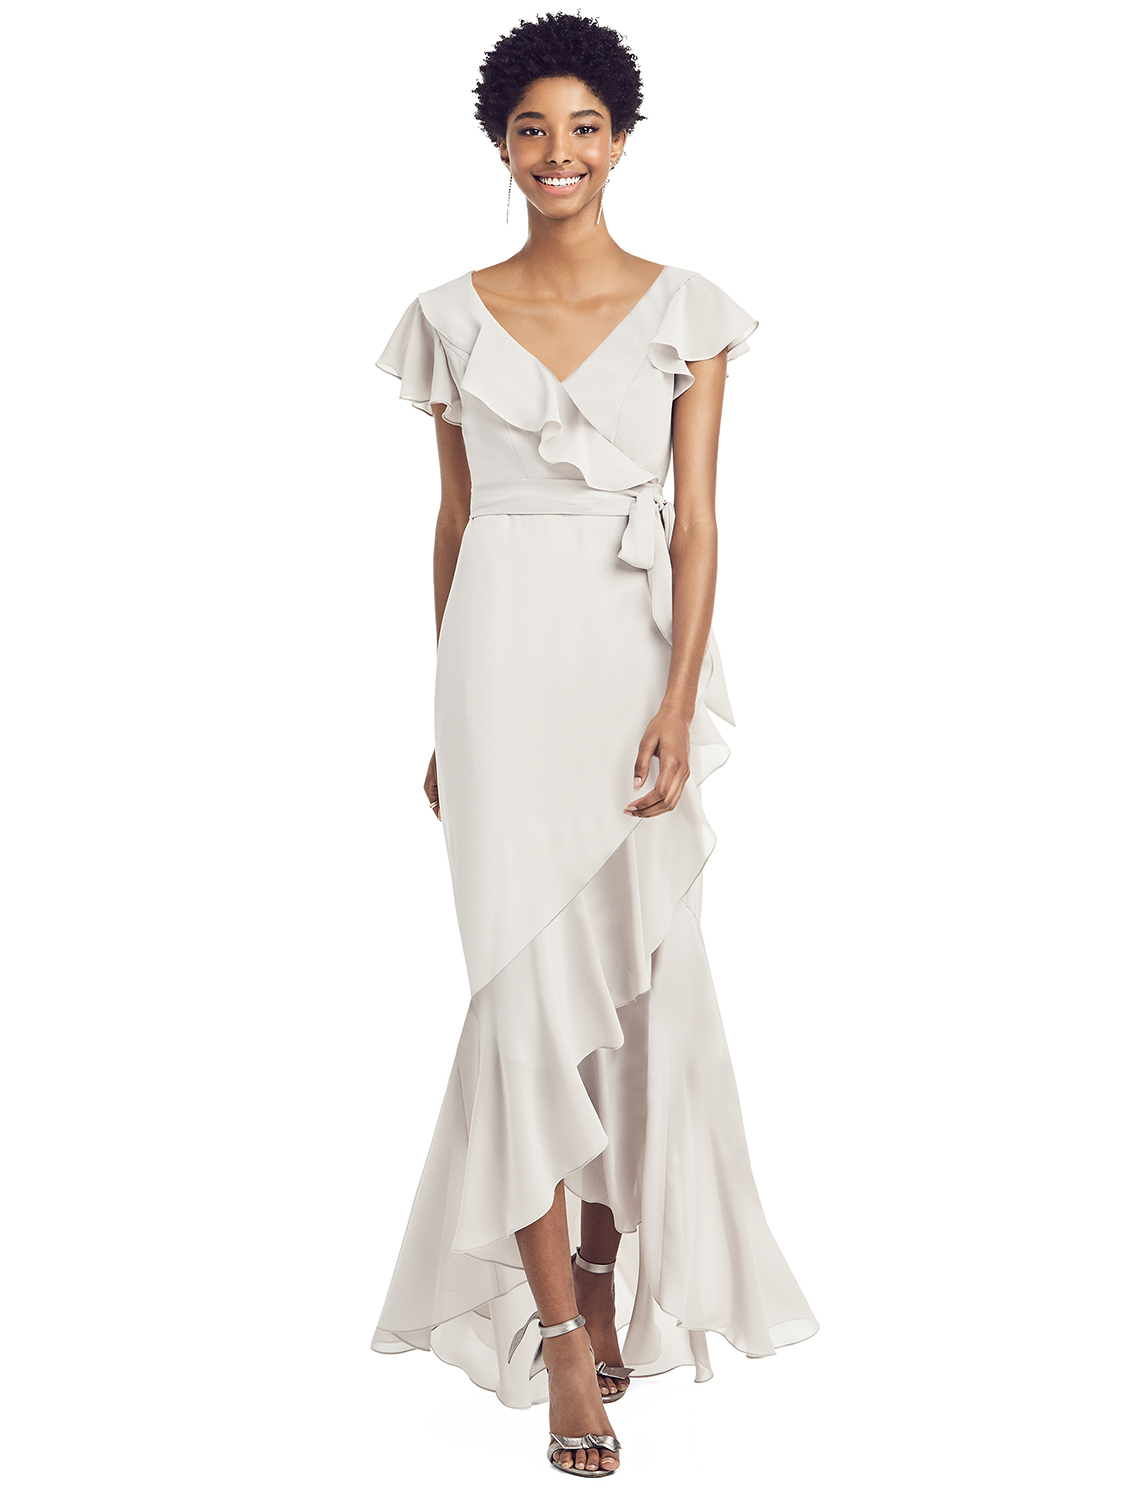 Dress - Social Bridesmaids SPRING 2020 - 8199 - Ruffled Wrap Dress with ...